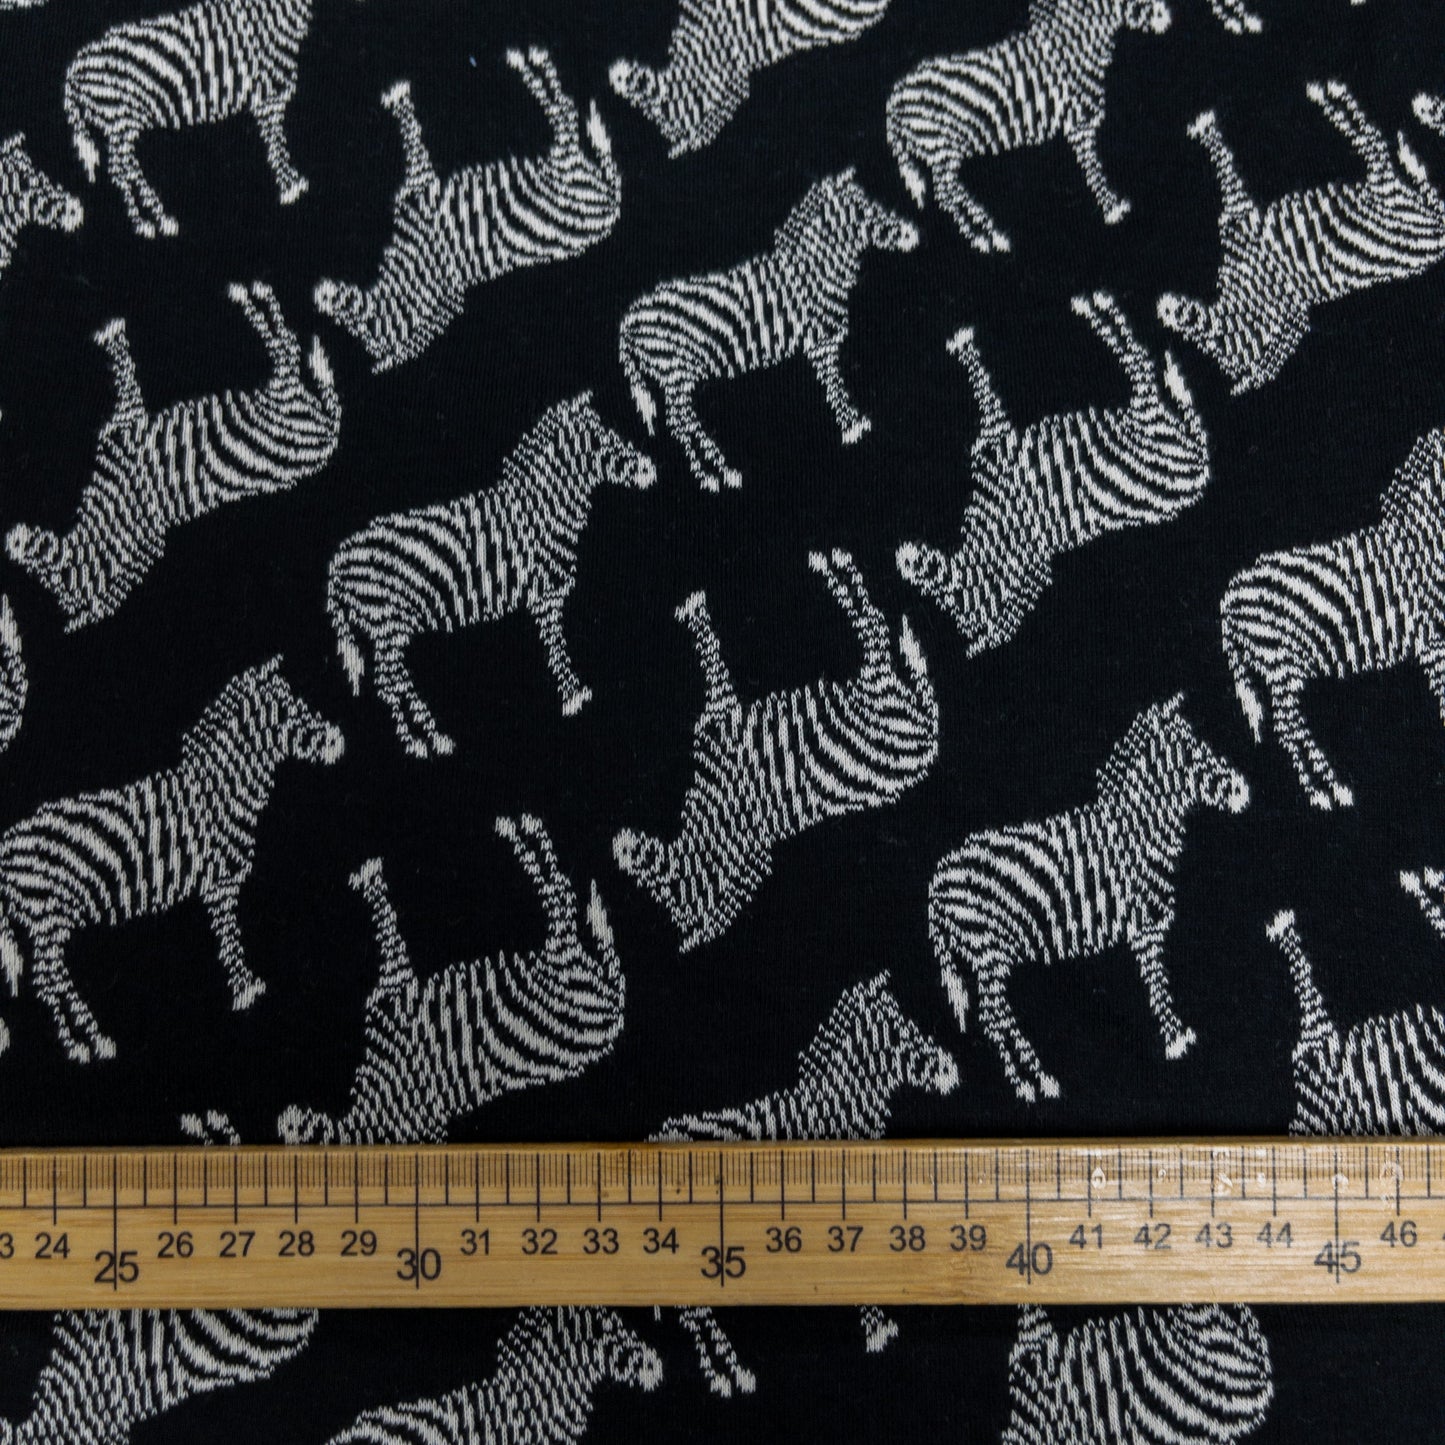 maffon | zebra black ivory 班馬 黑+米色 | cotton jacquard knit 雙面純棉提花針織 - 160cm